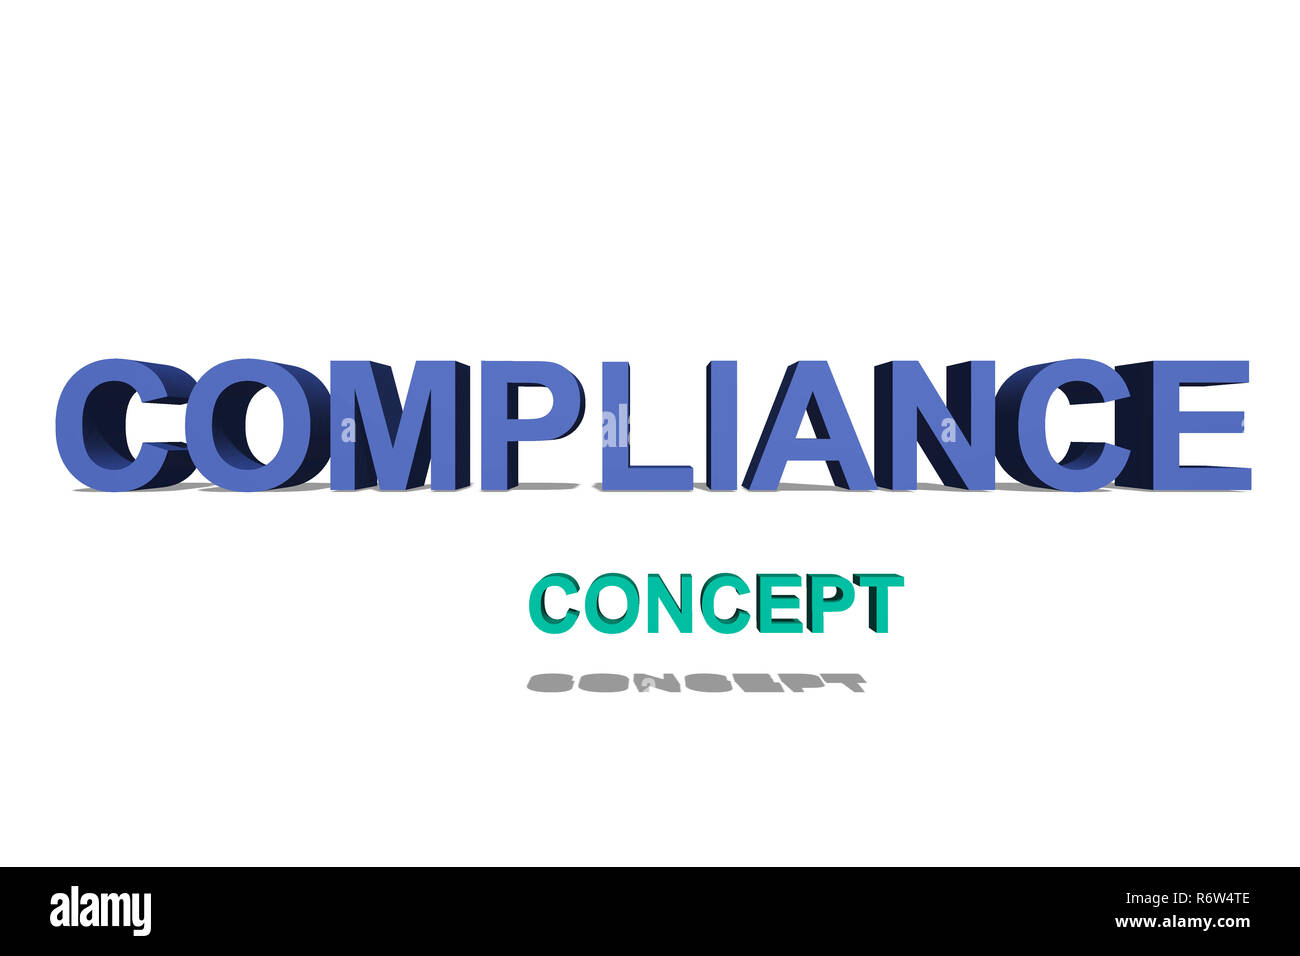 compliance concept Stock Photo